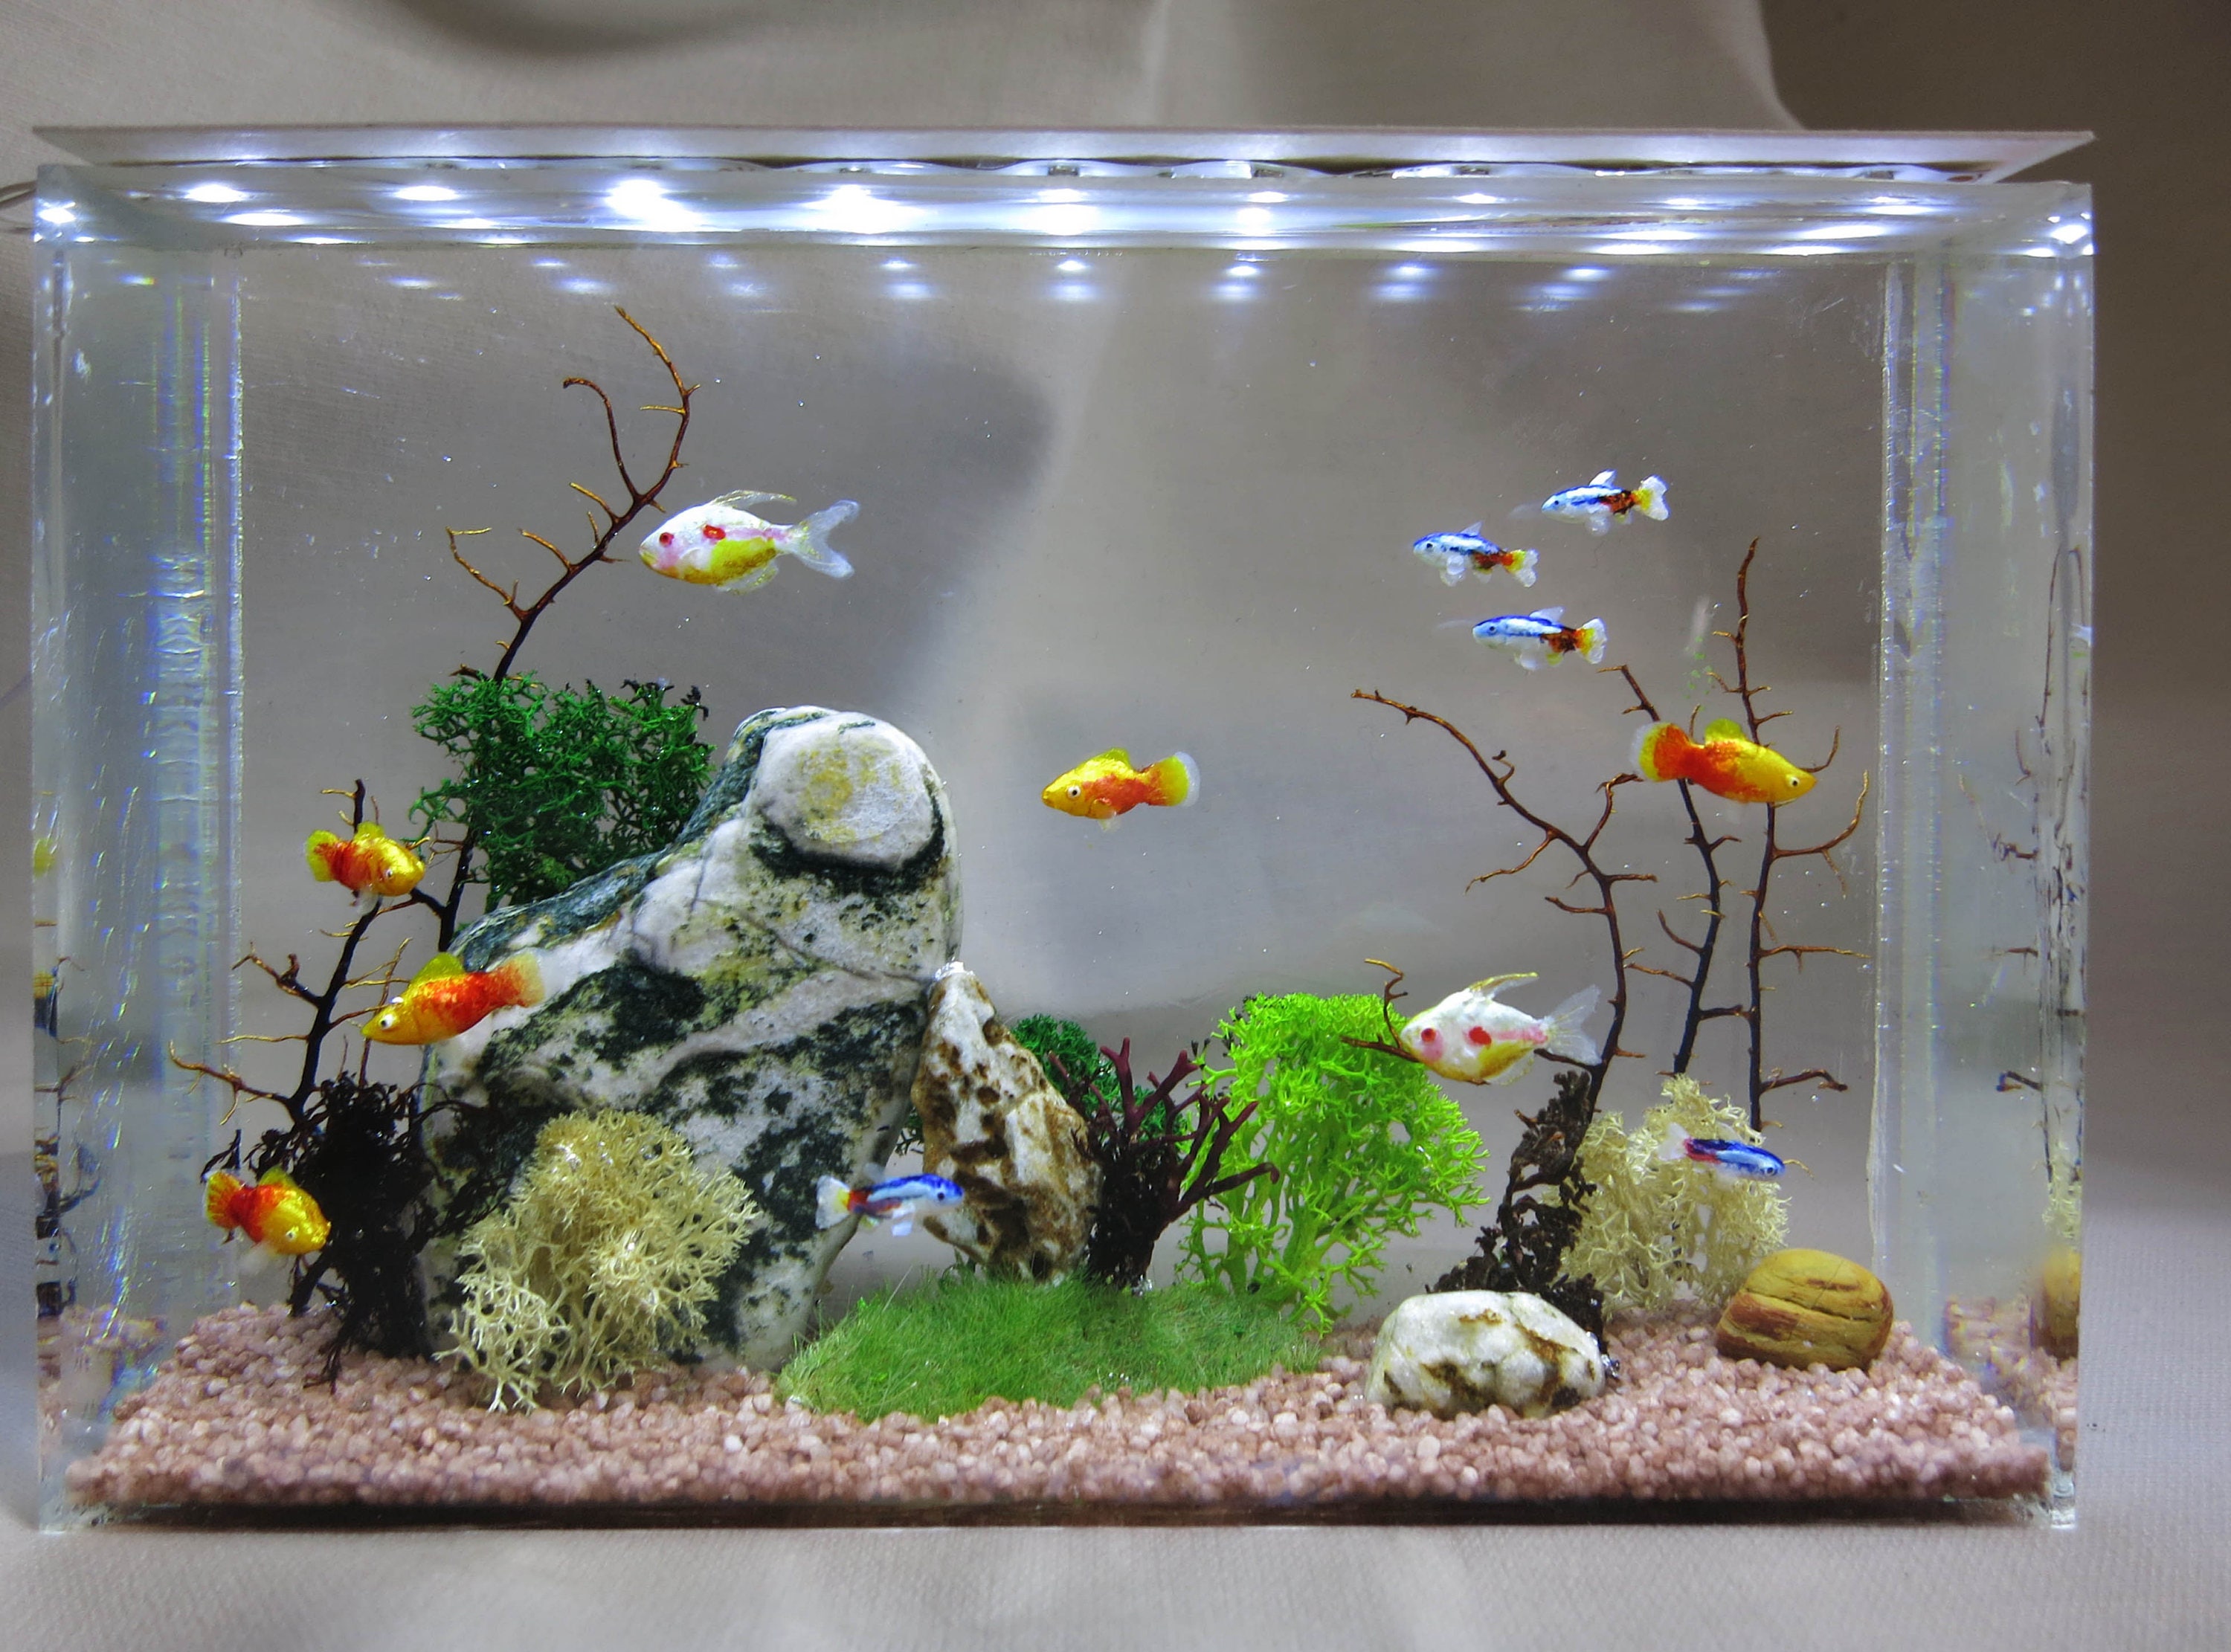  Miniature aquarium  fish tank for a dollhouse wall 1 12 scale